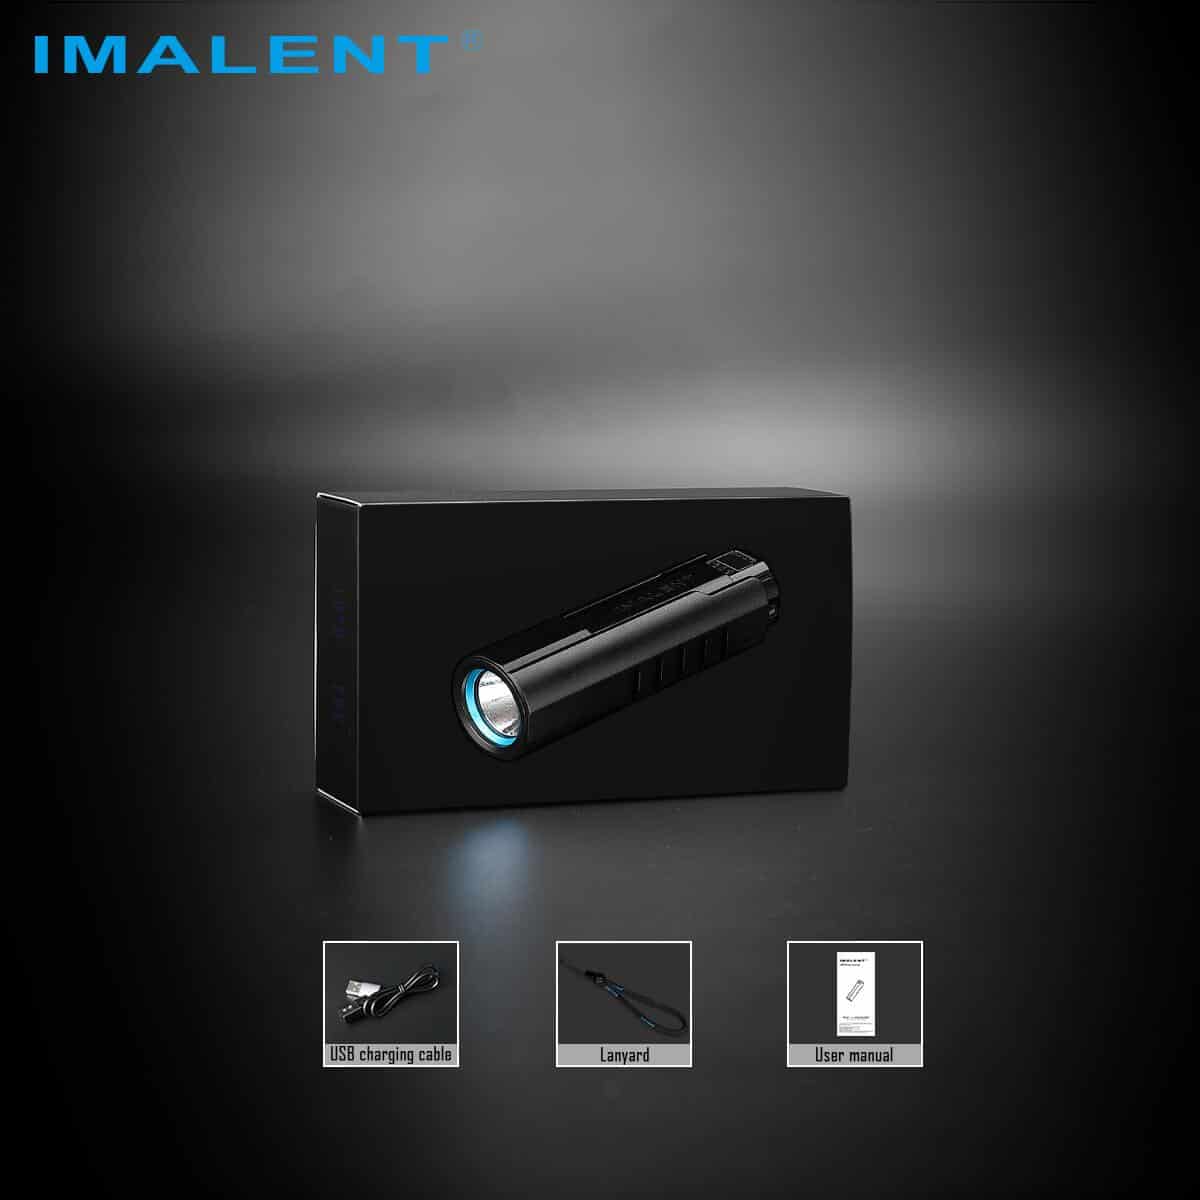 Best EDC Flashlight IMALENT LD70 - IMALENT Blue